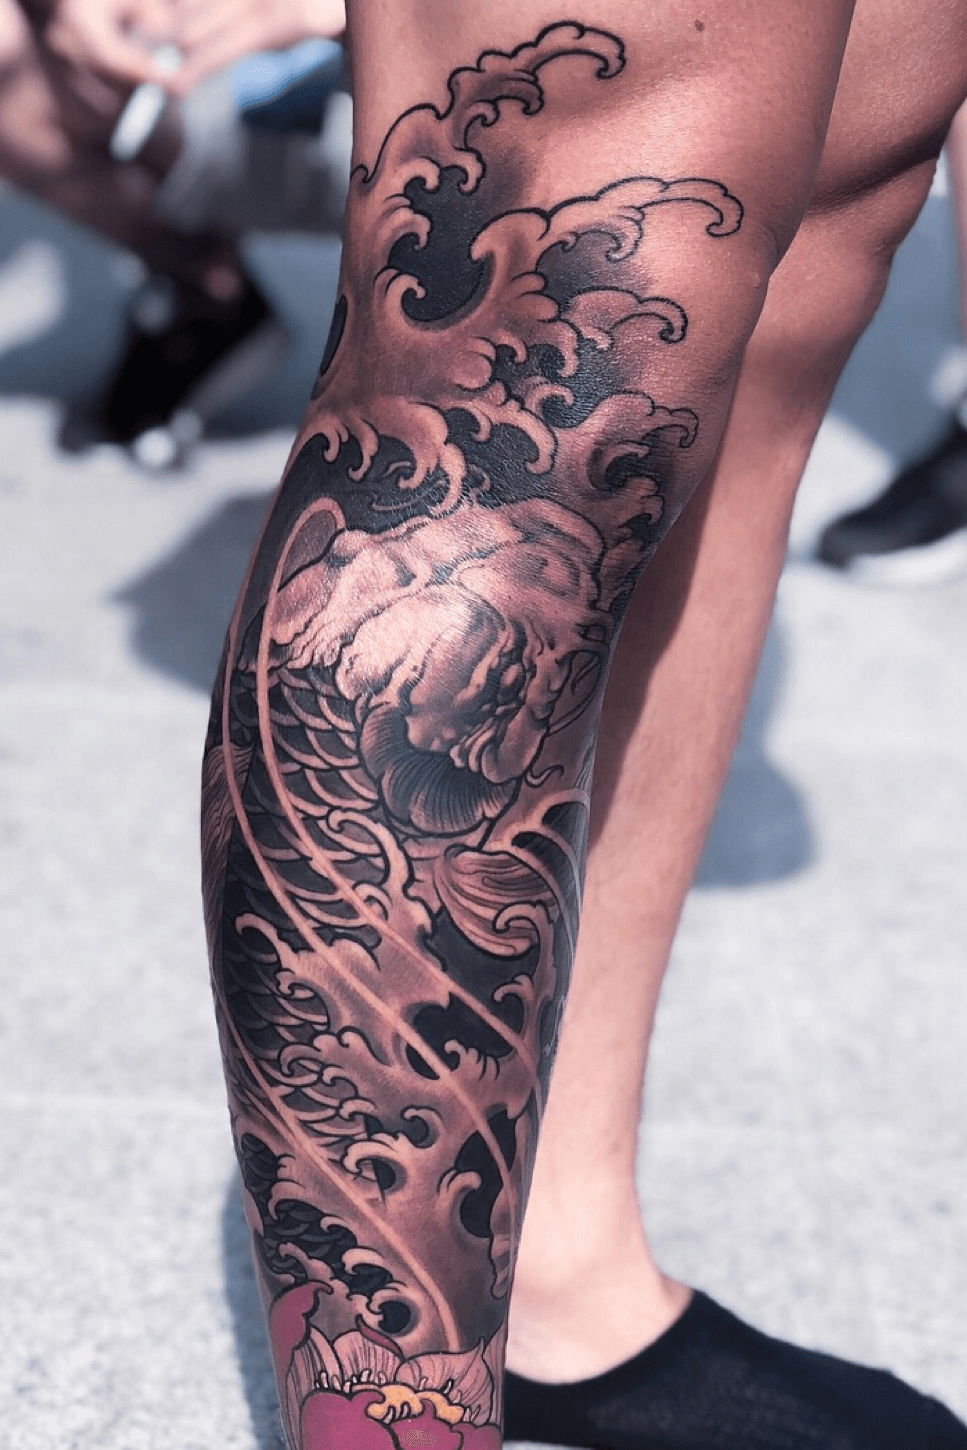 Houston fisherman gets awesome leg tattoo